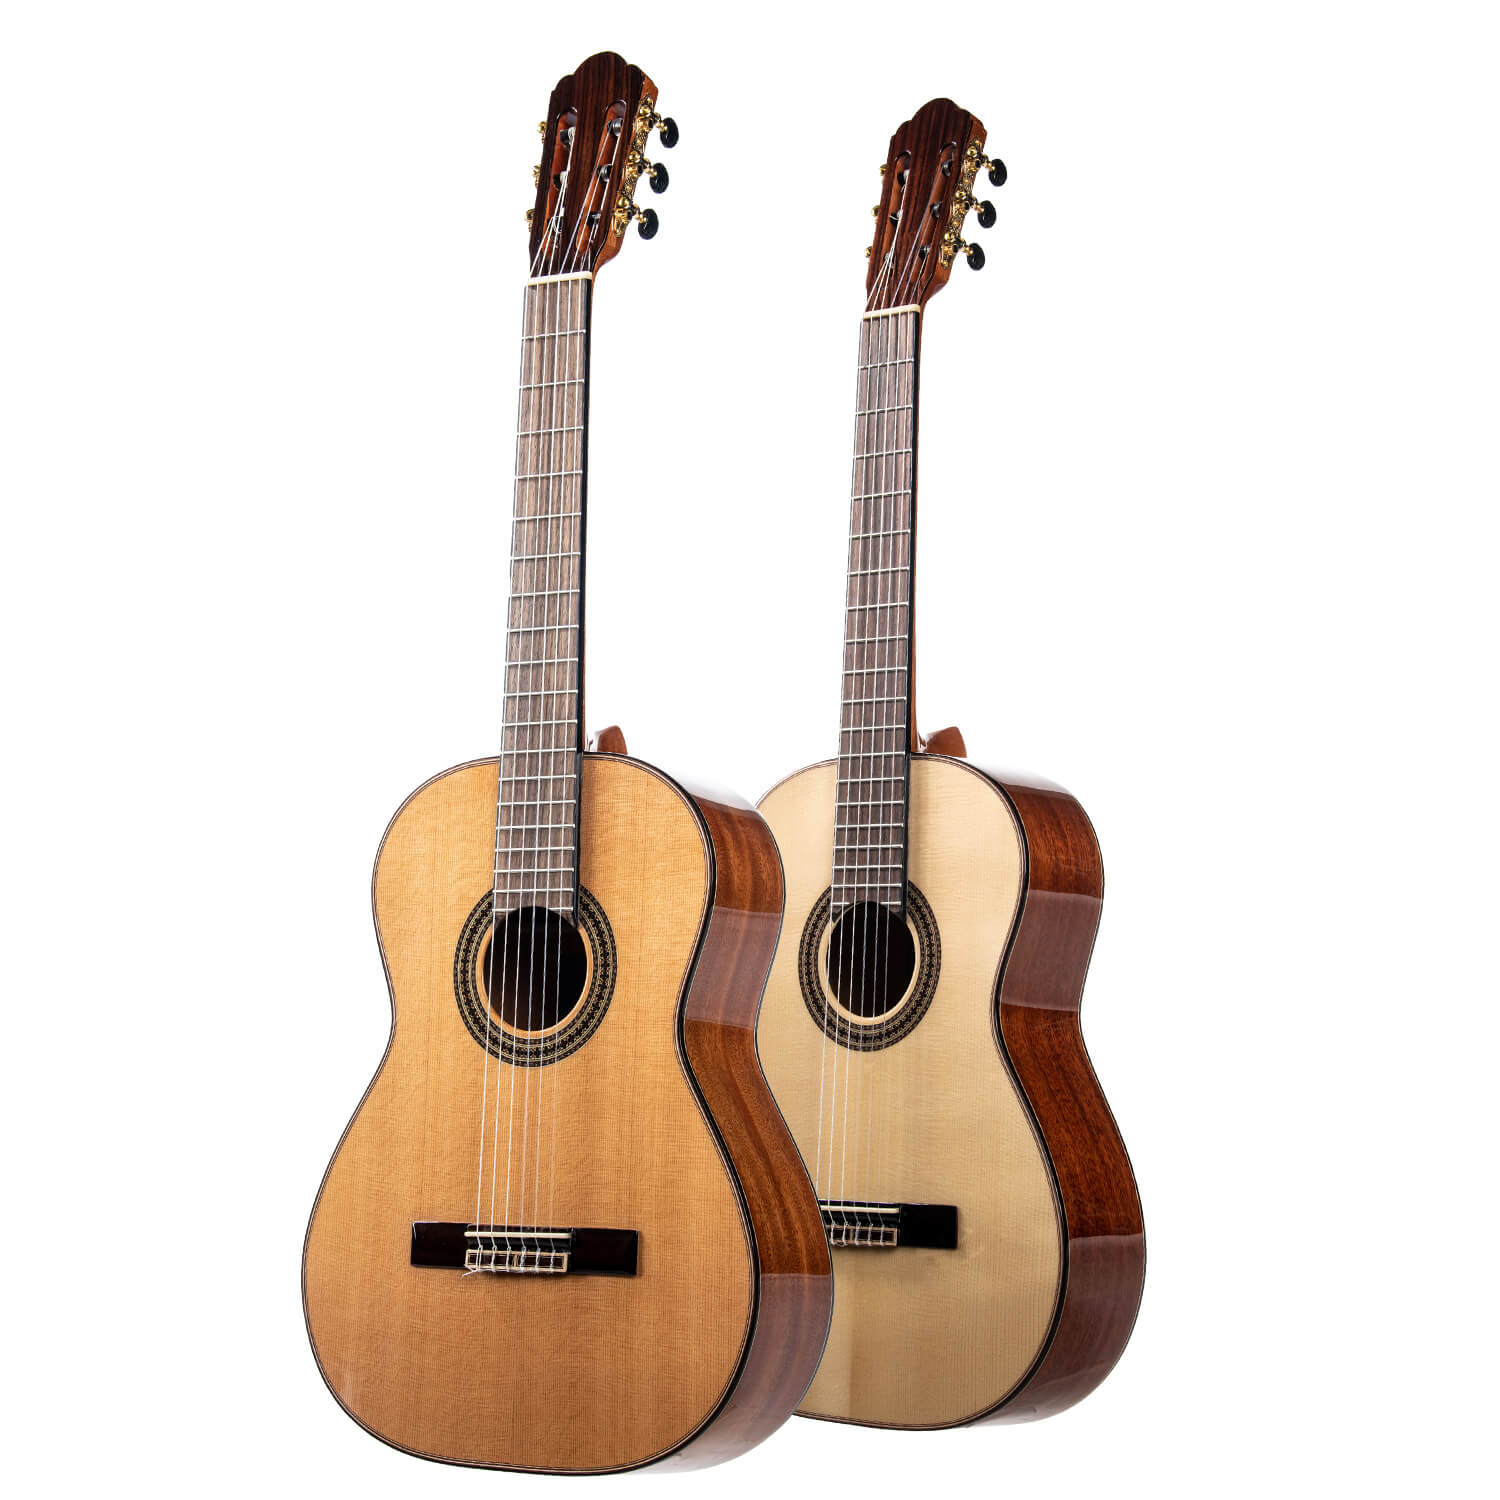 Avila AC-800C All solid mahogany classical guitar : High quality classical guitar